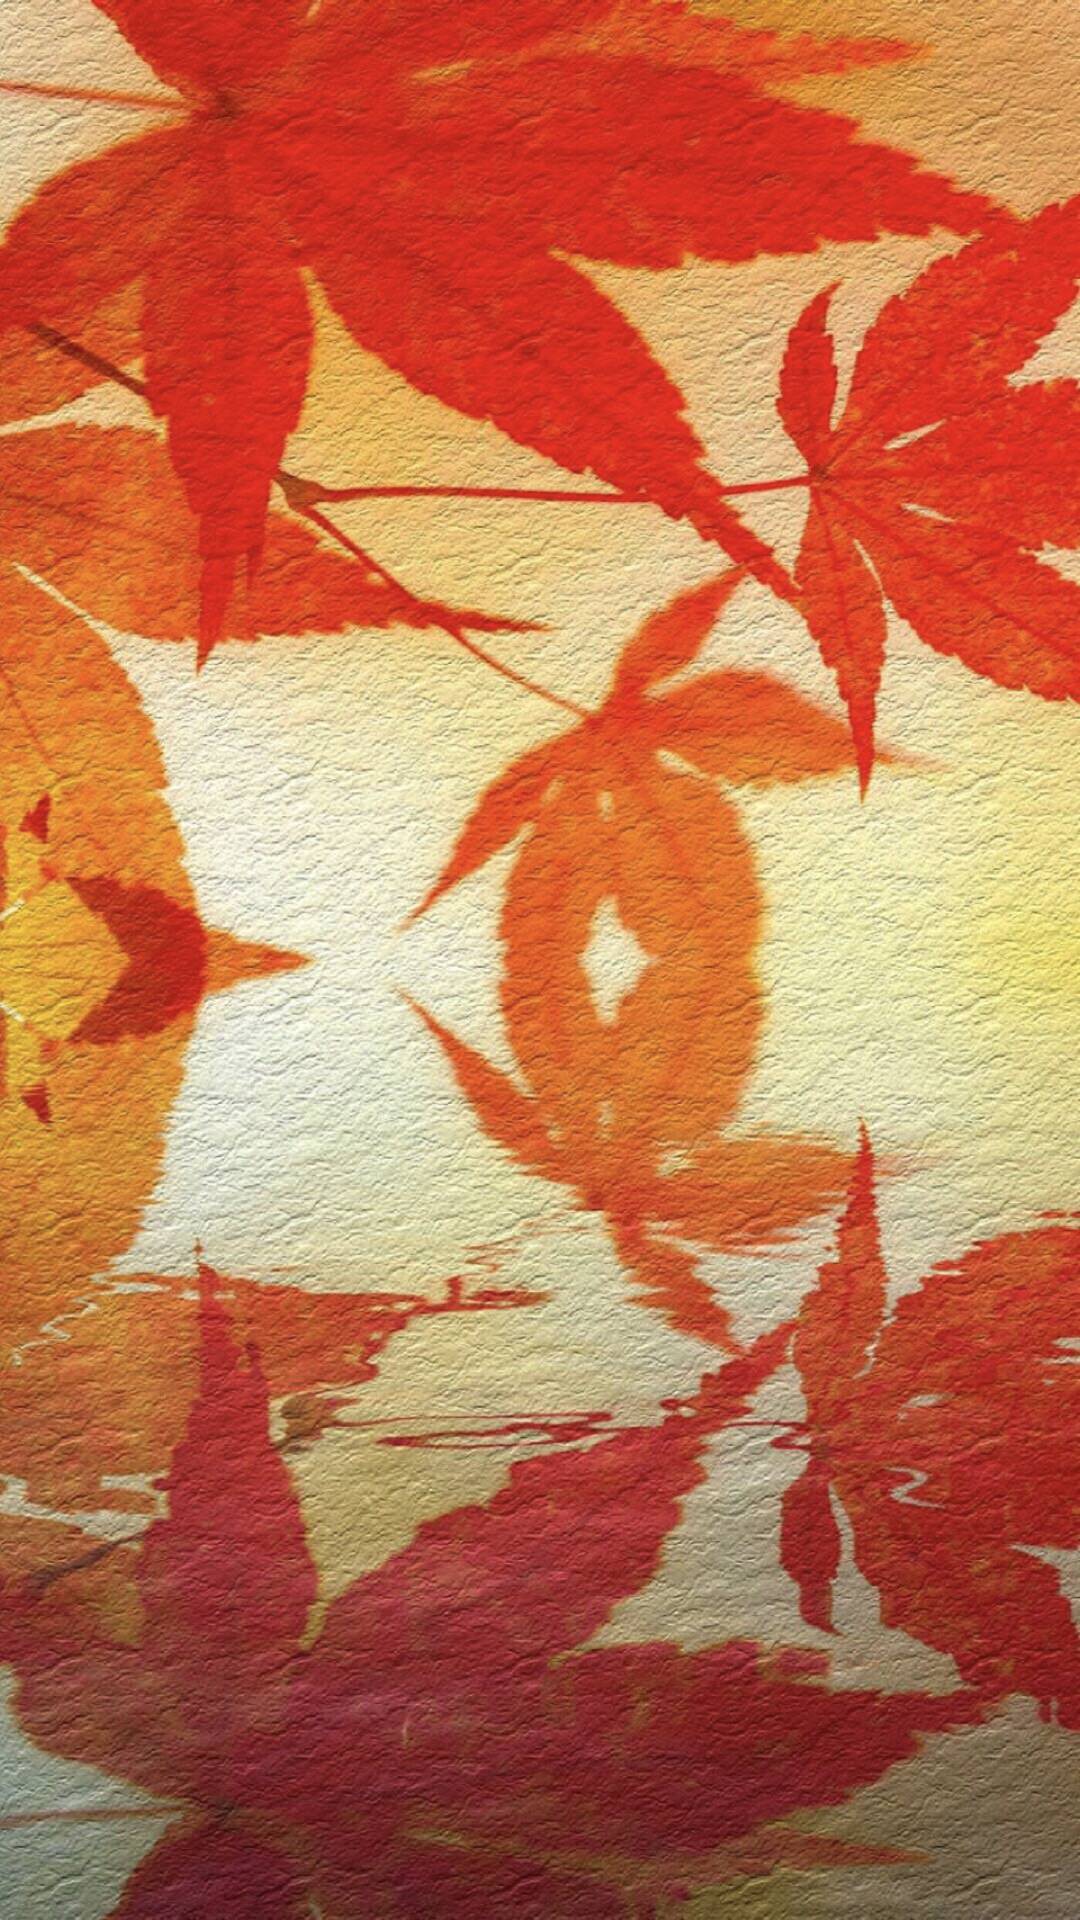 Autumn Leaves Japanese Style Wallpaper Sc Iphone6splus